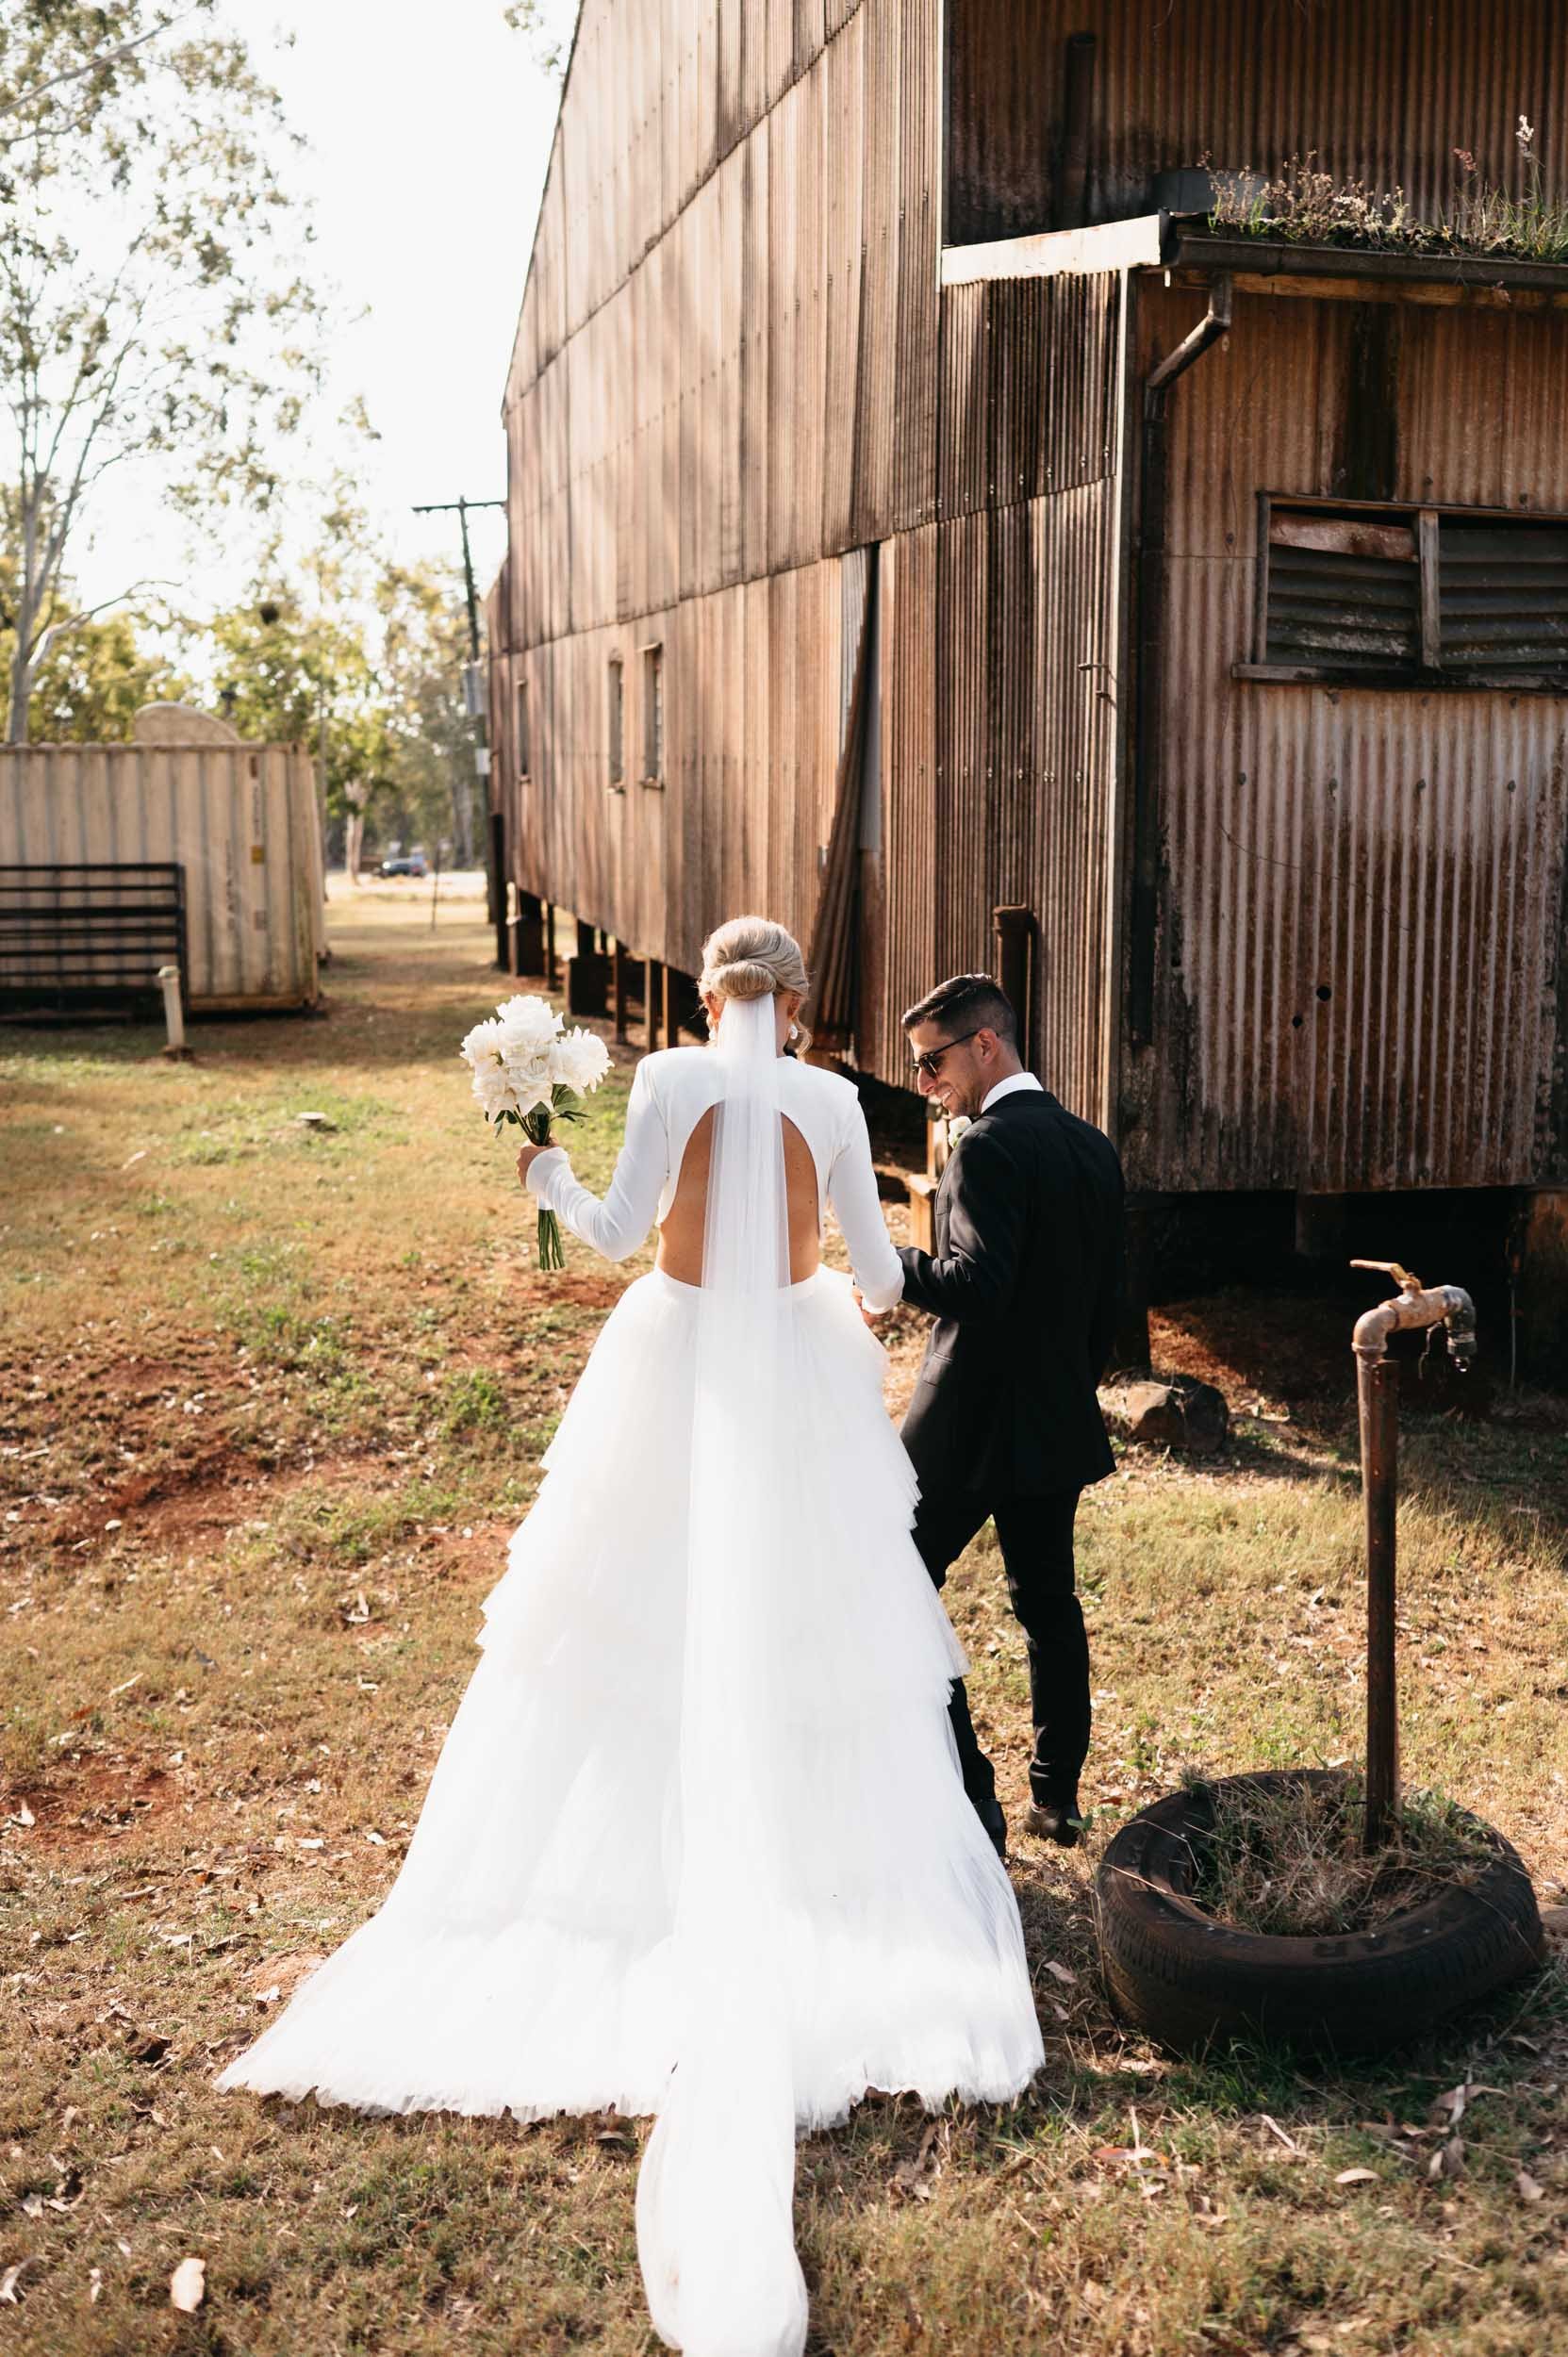 The Raw Photographer - Cairns Wedding Photographer - Mareeba Tablelands - Queensland photography - Kyha dress - luxury-34.jpg